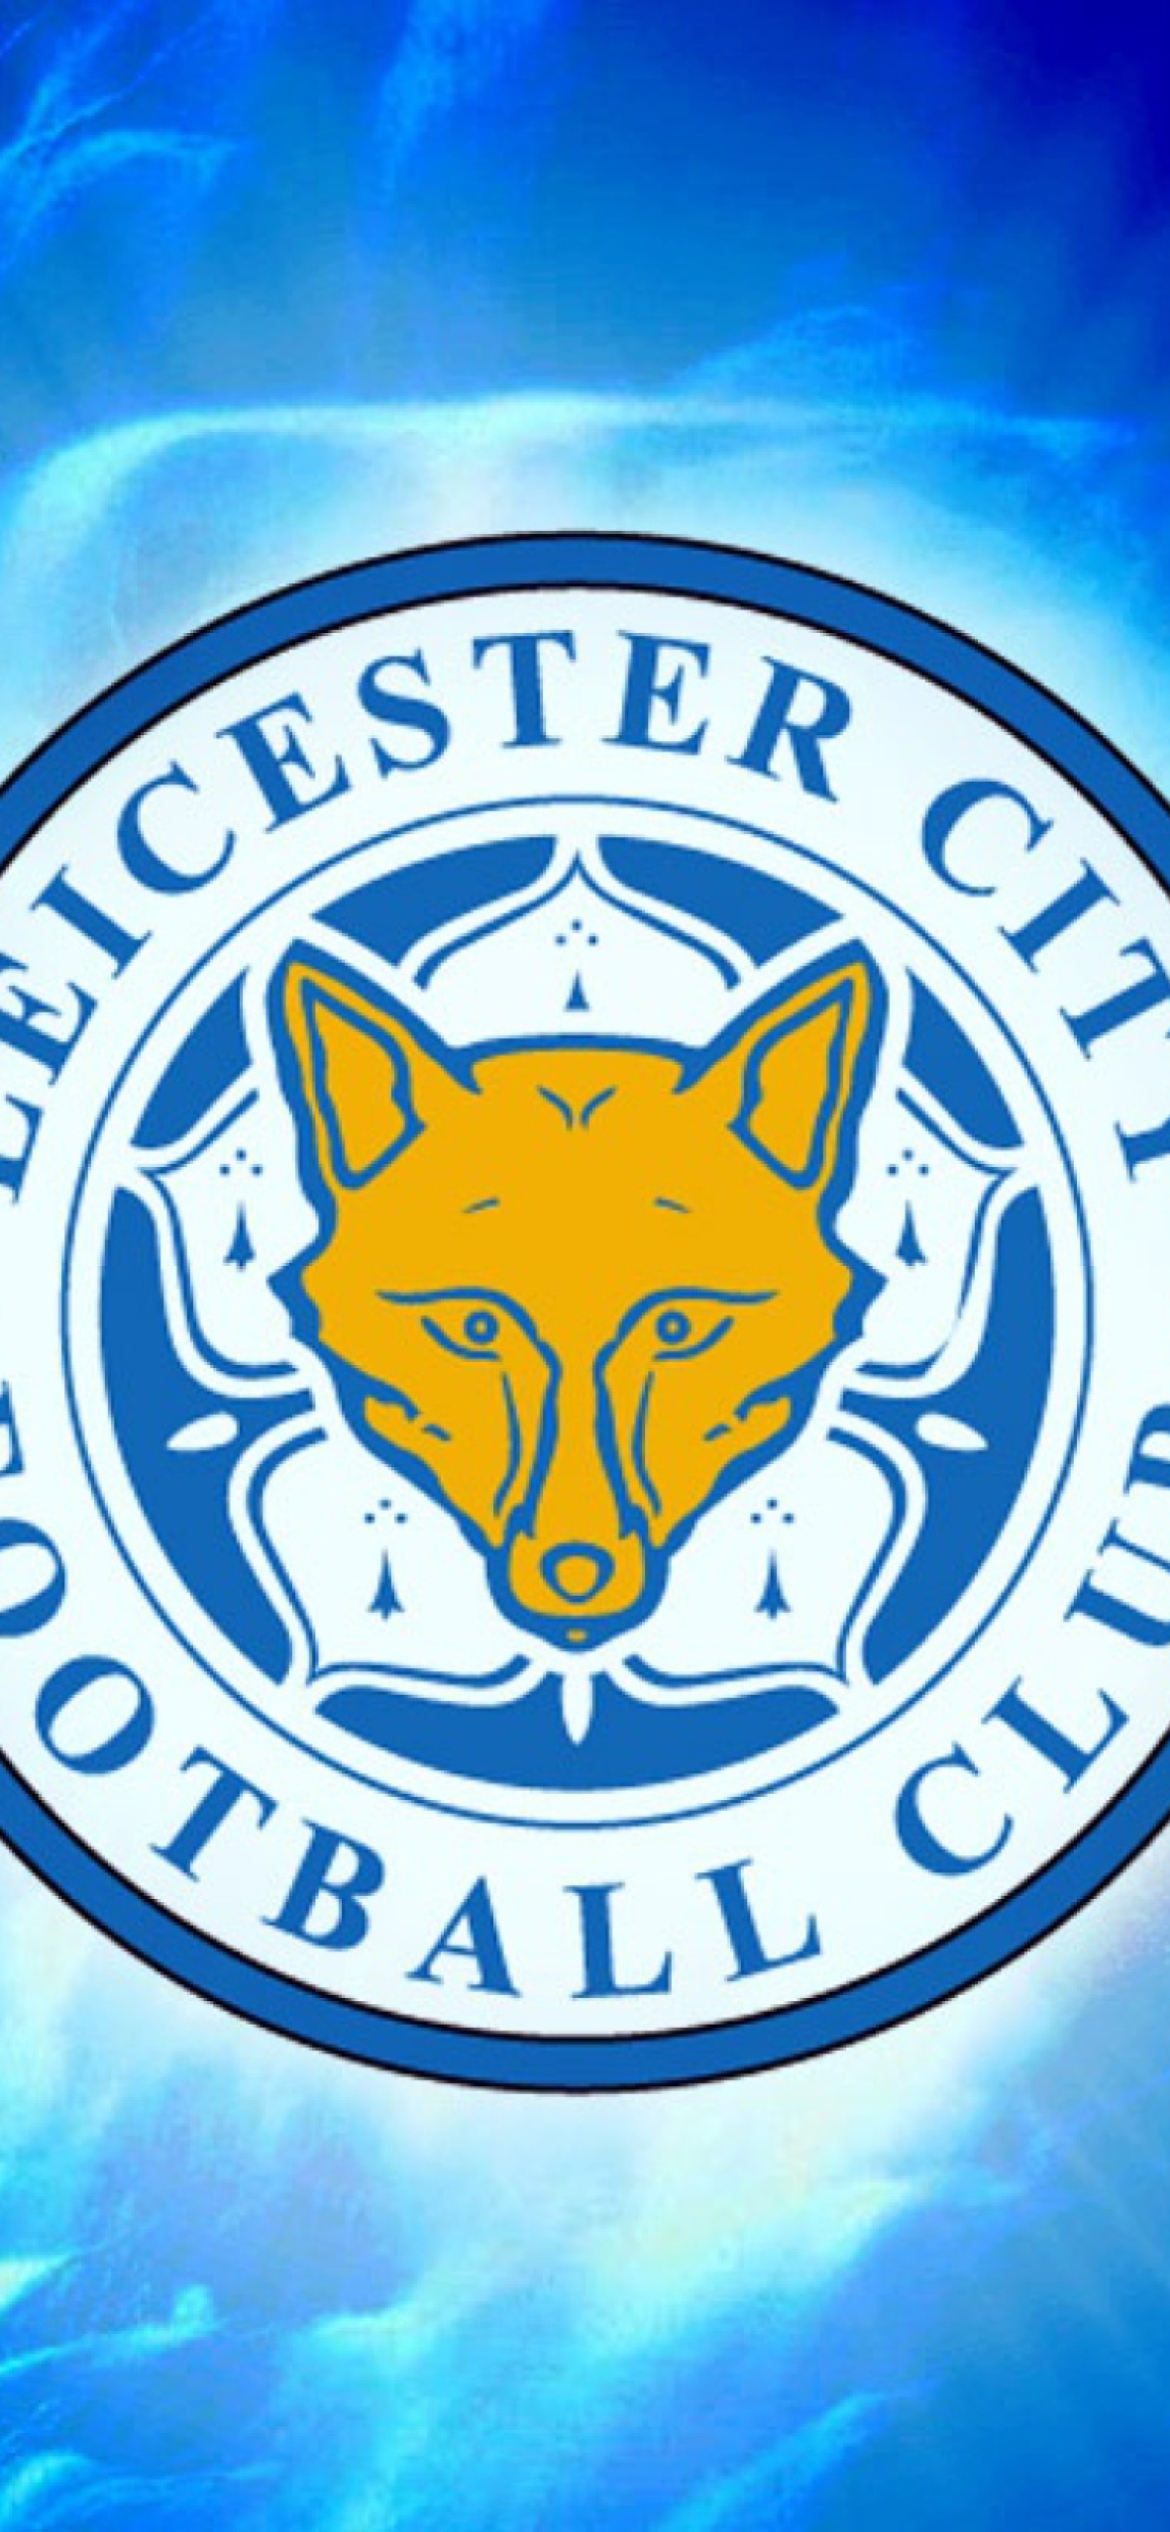 Das Leicester City Football Club Wallpaper 1170x2532